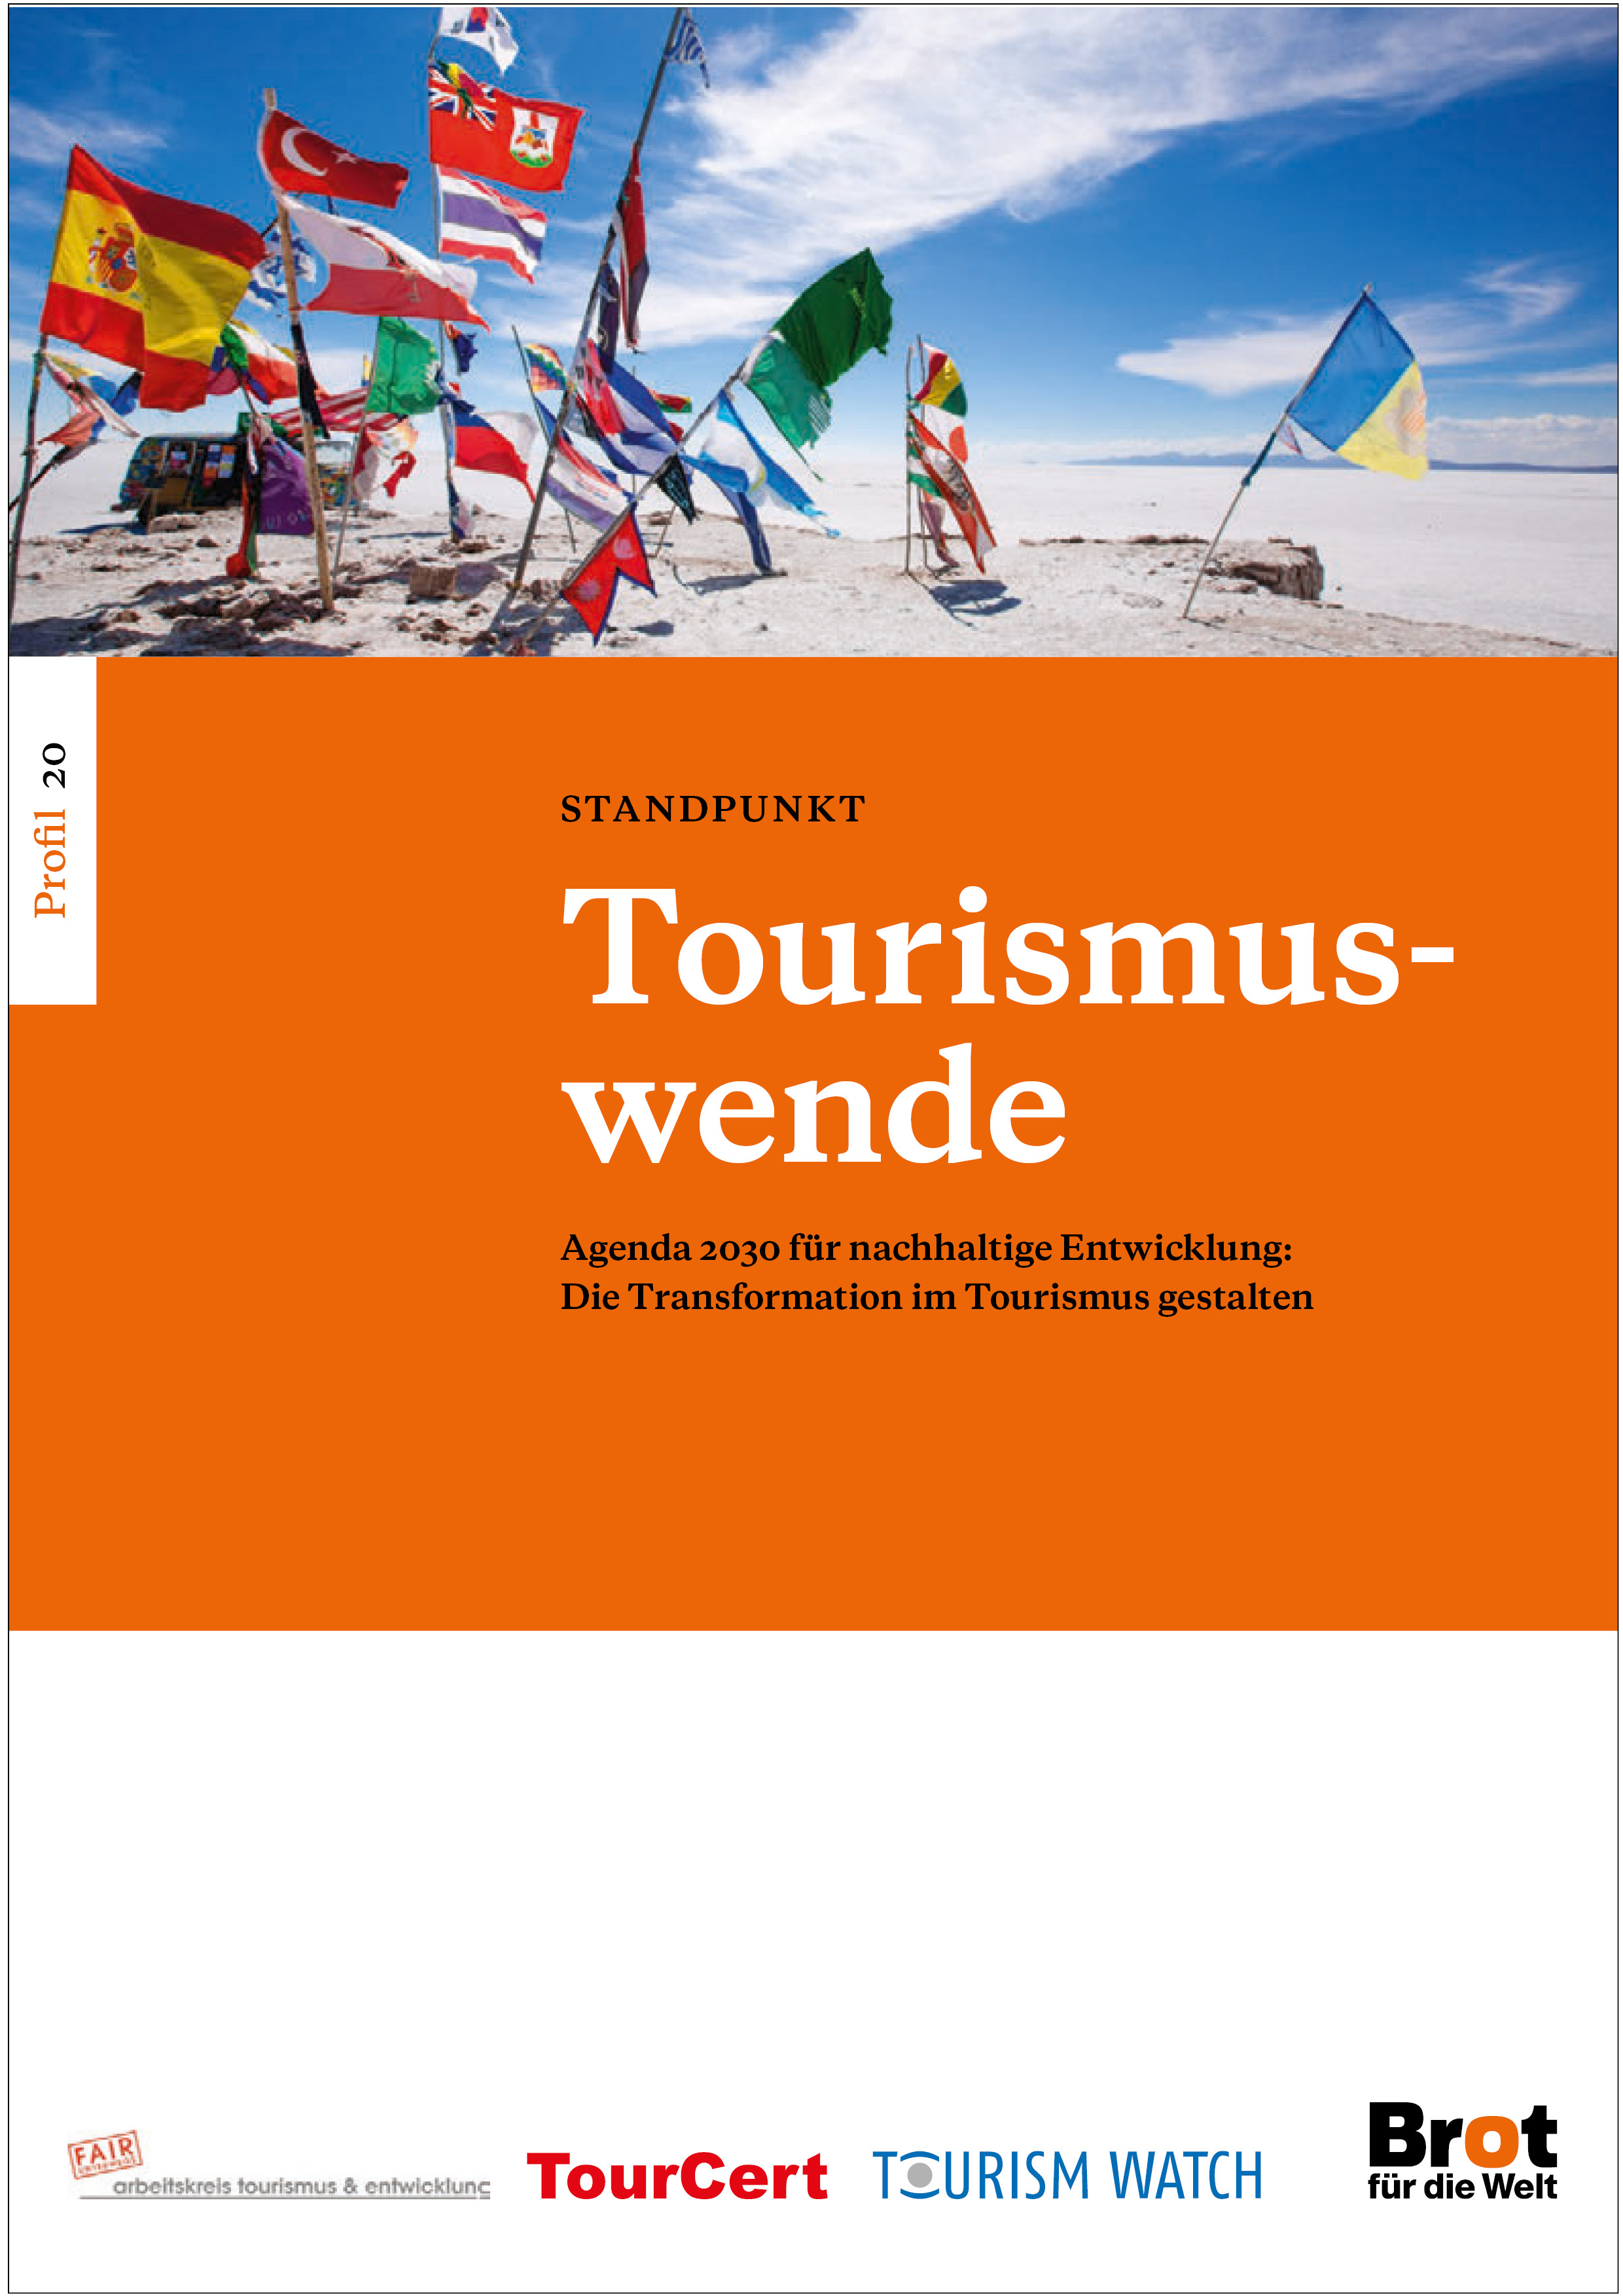 Profil 20: Tourismuswende